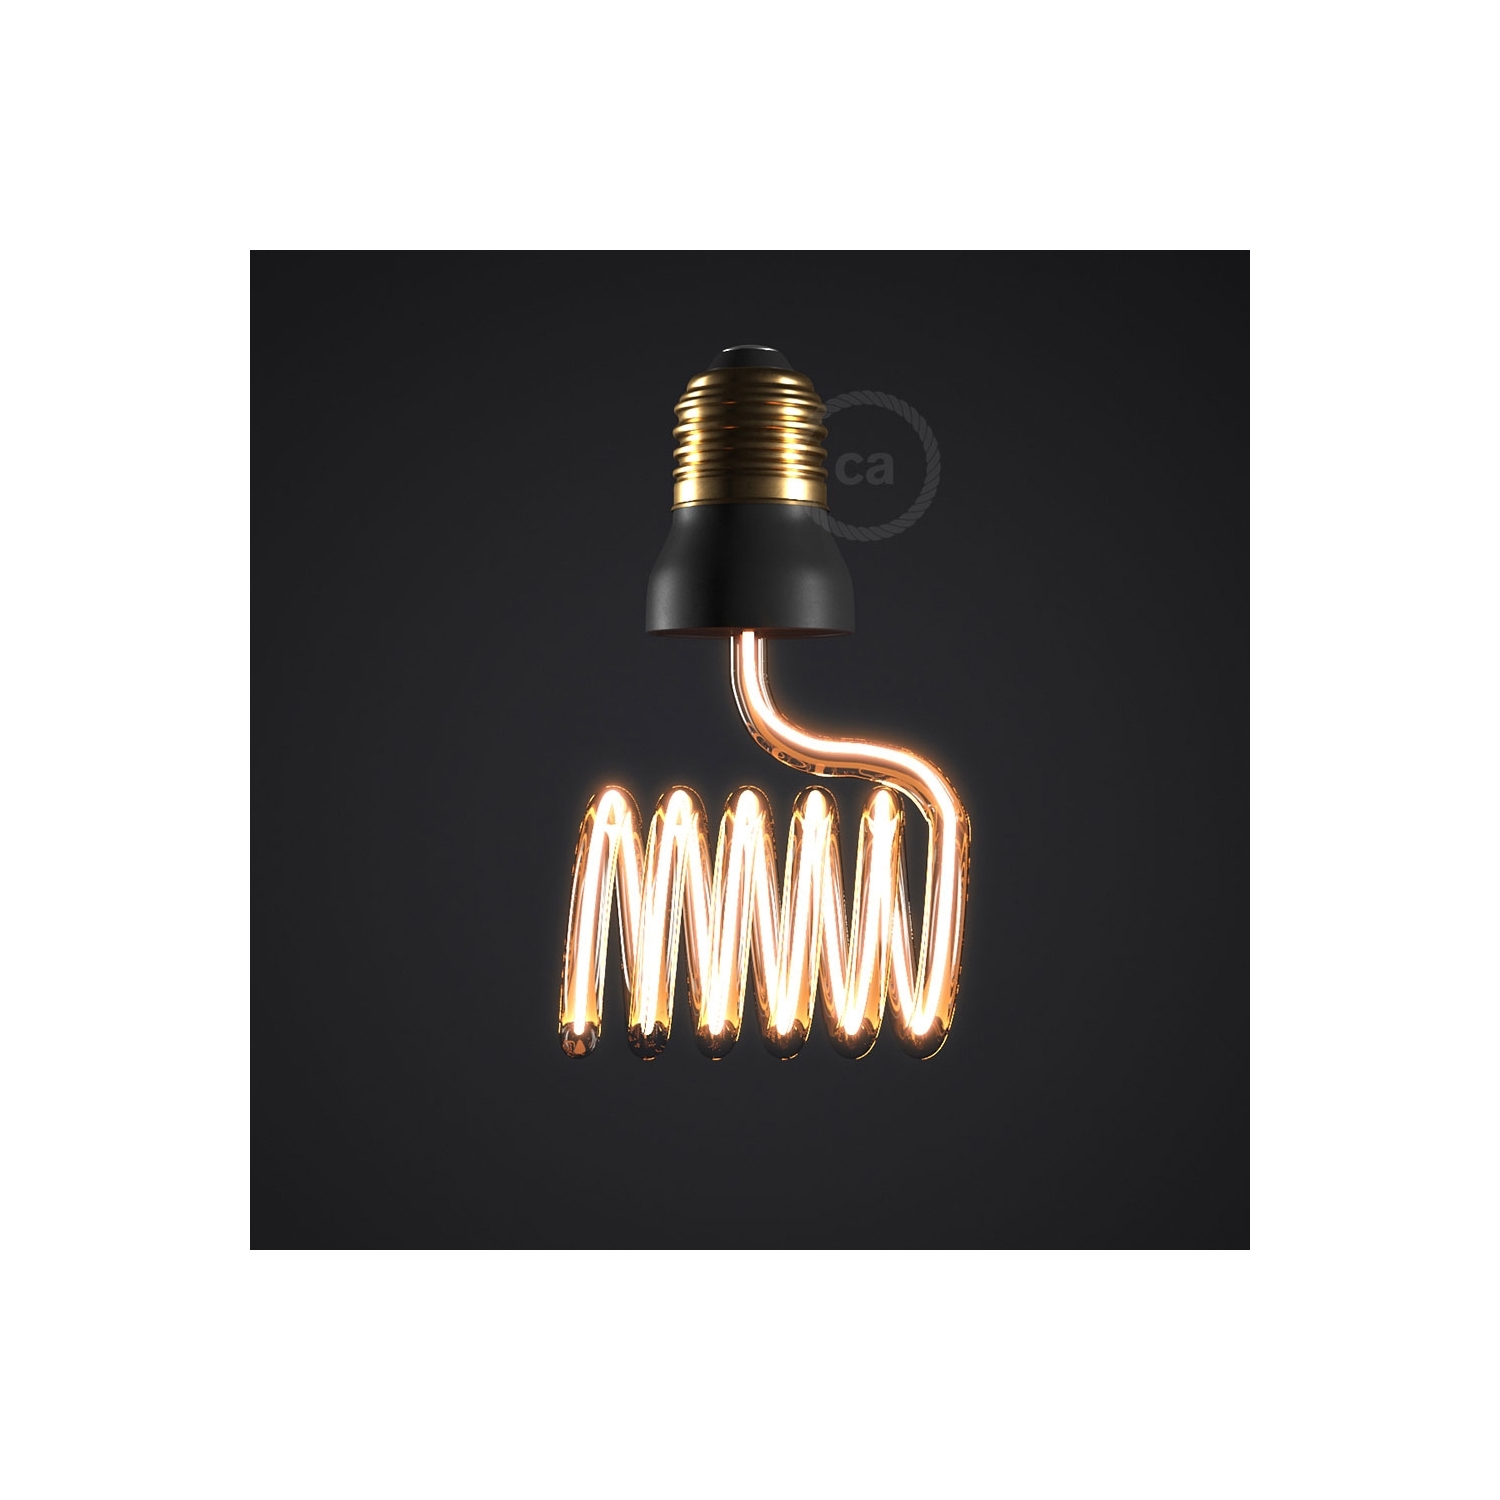 The Curling Iron Bulb - LED Art Loop Cross Light Bulb